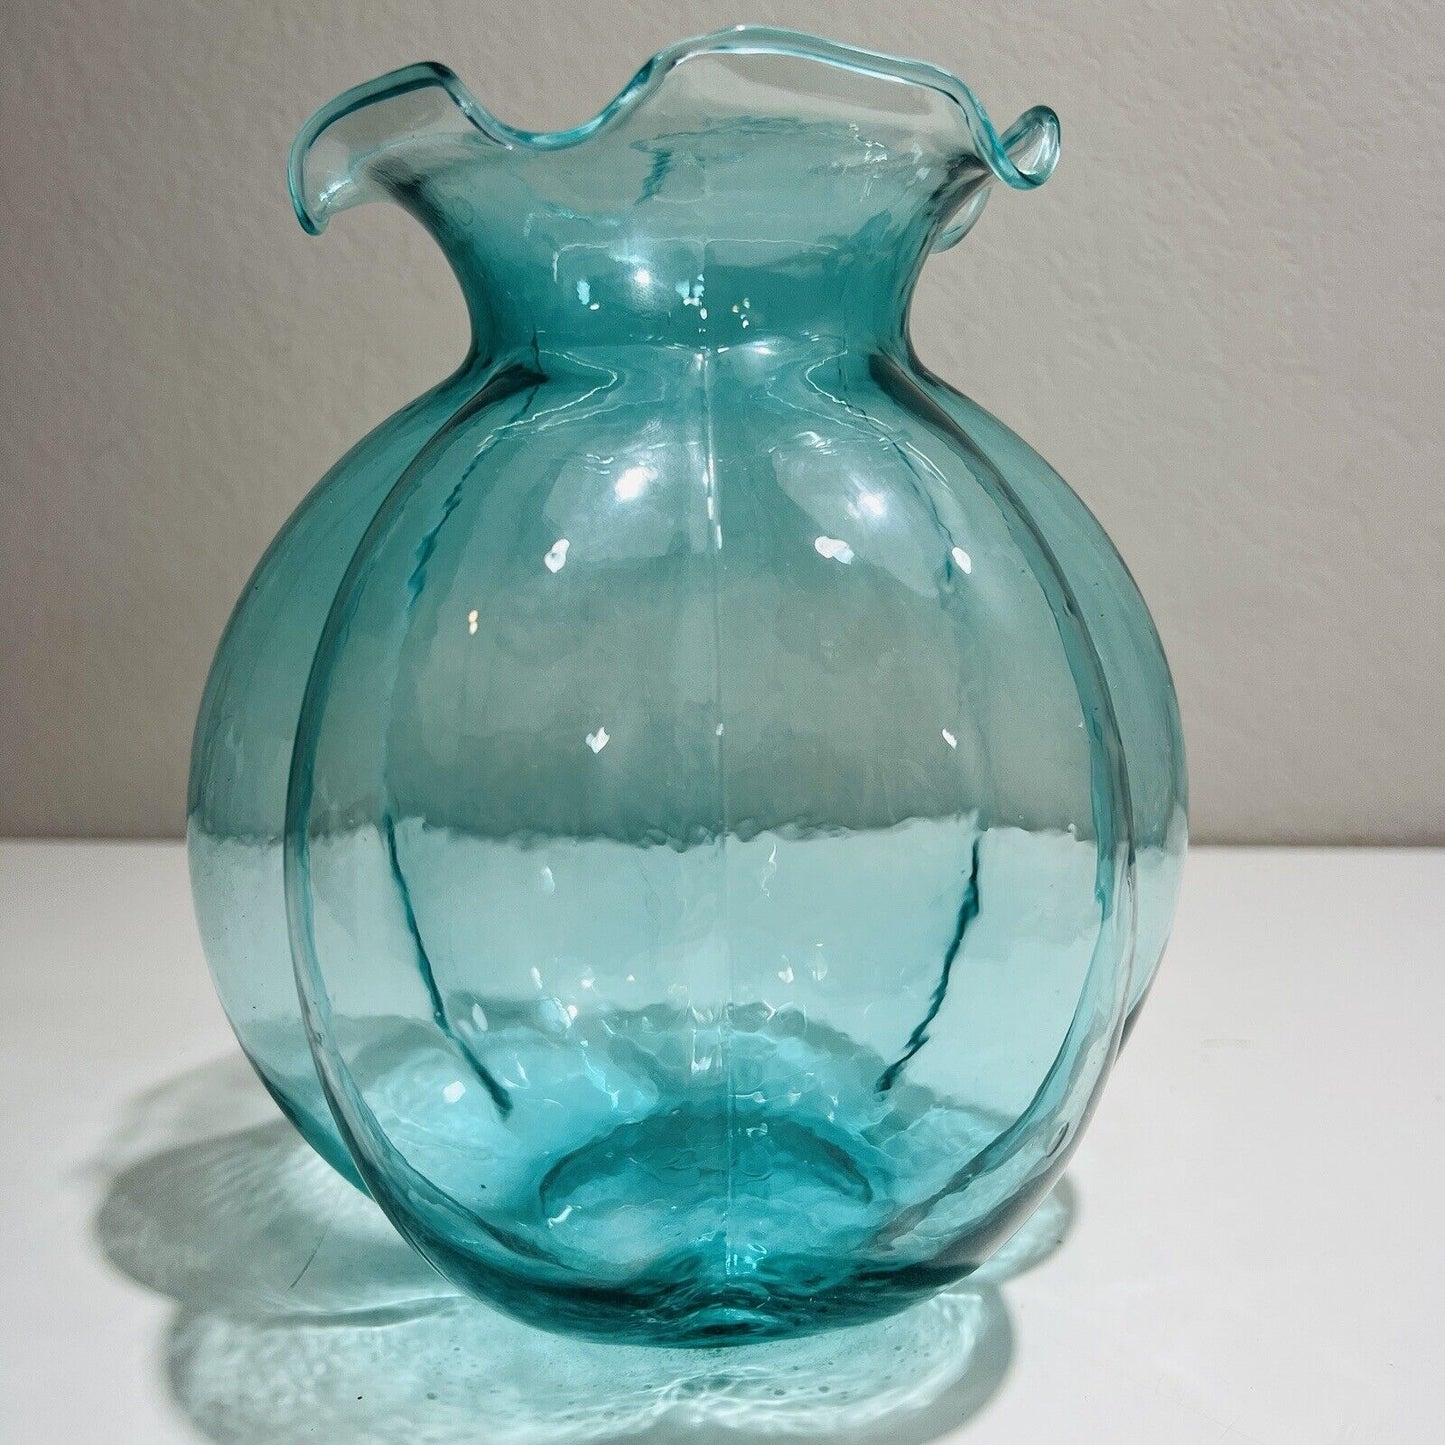 Vase Art Glass Round Teal Blue Melon Shape 1950 Vintage Home Decor